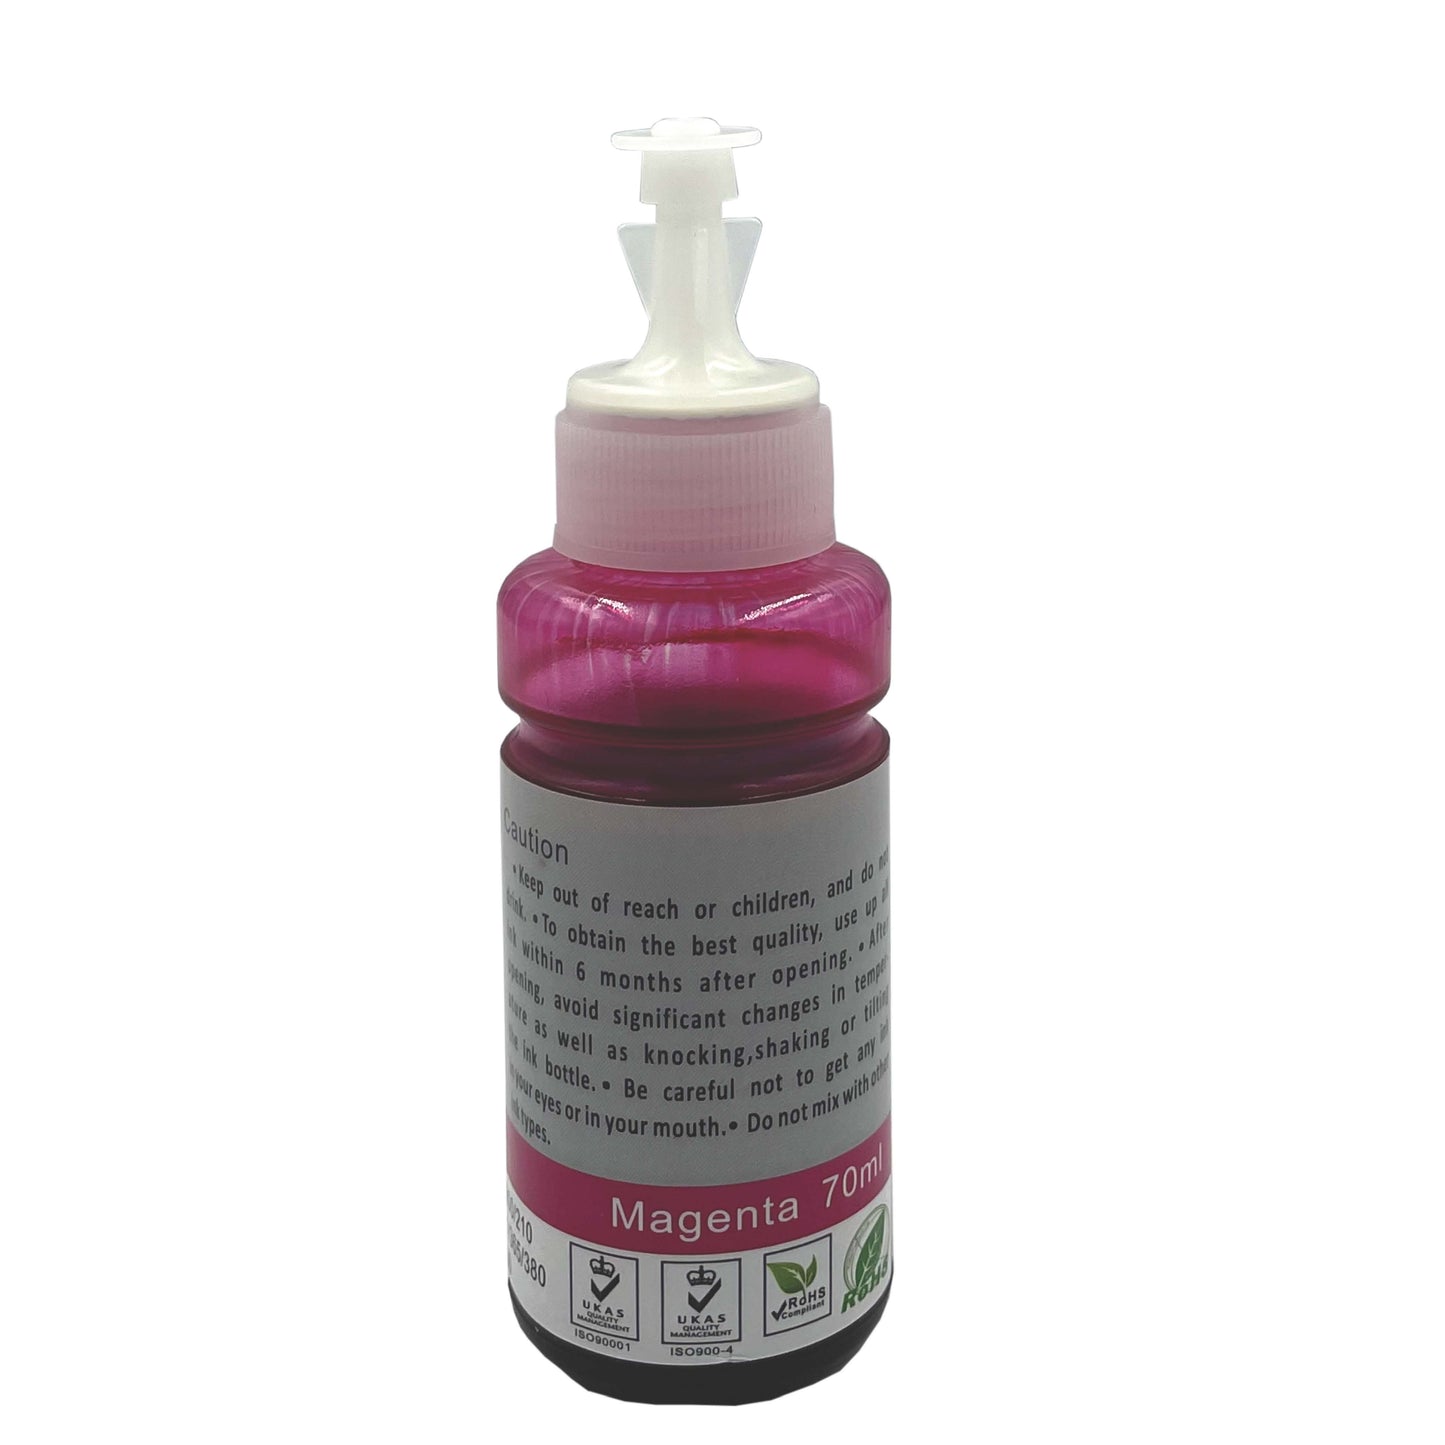 CRE8 | Compatible Epson E6643 Refill Bottle Ink